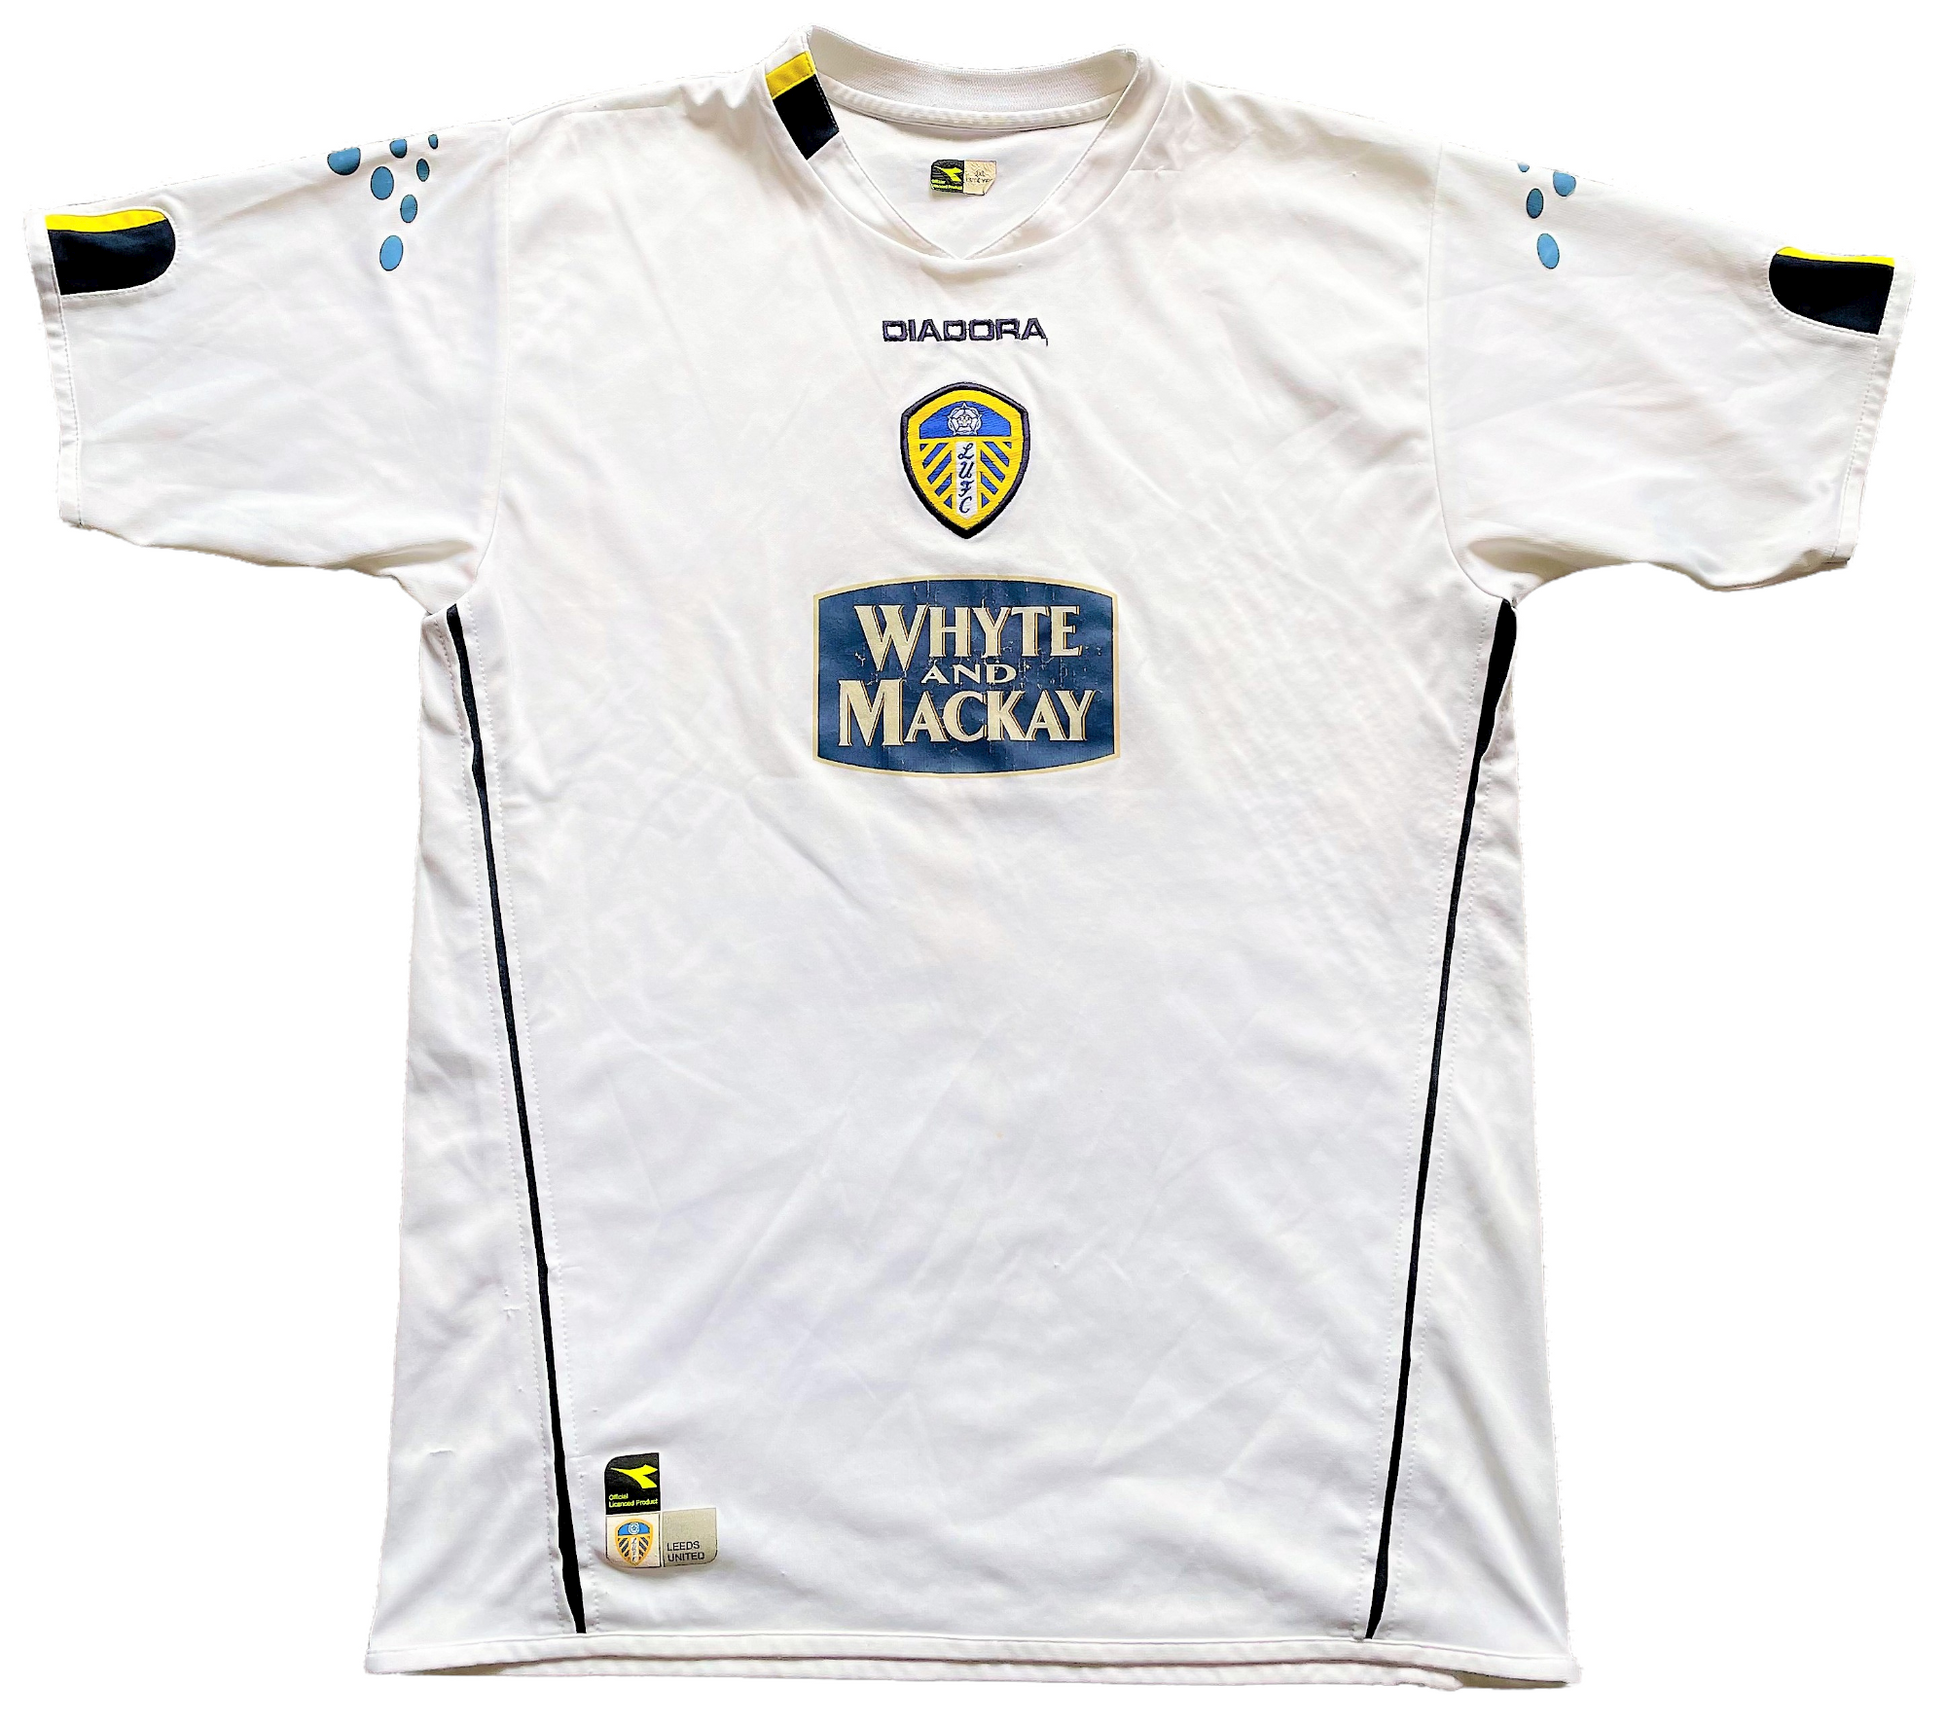 2004-05 Leeds United Home Shirt Youth 13-14 years